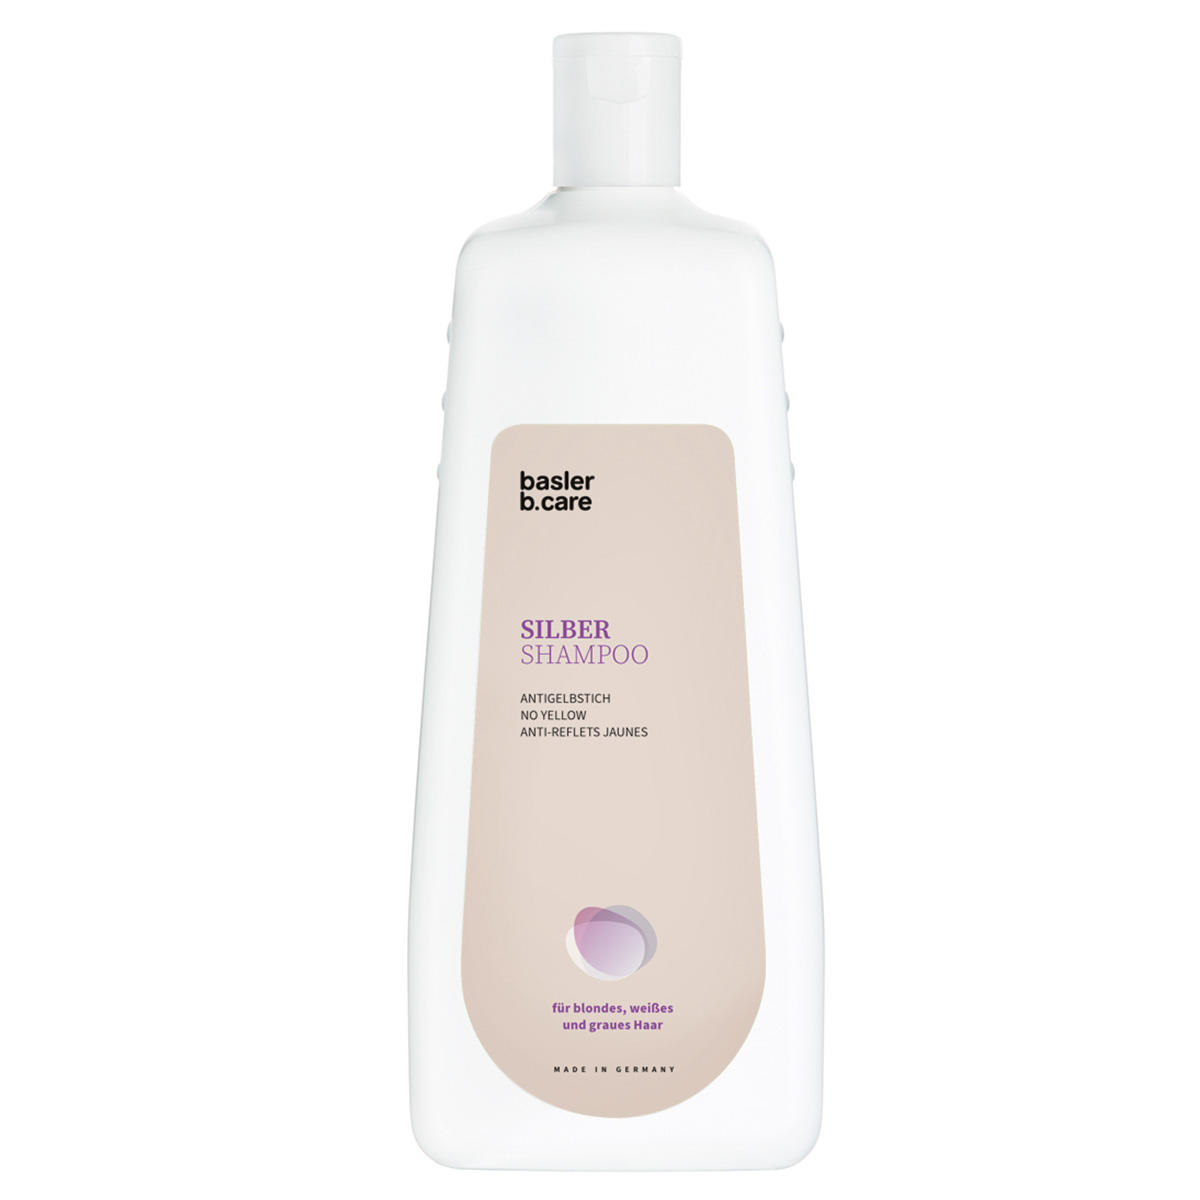 Basler Silber Shampoo 1 Liter - 1